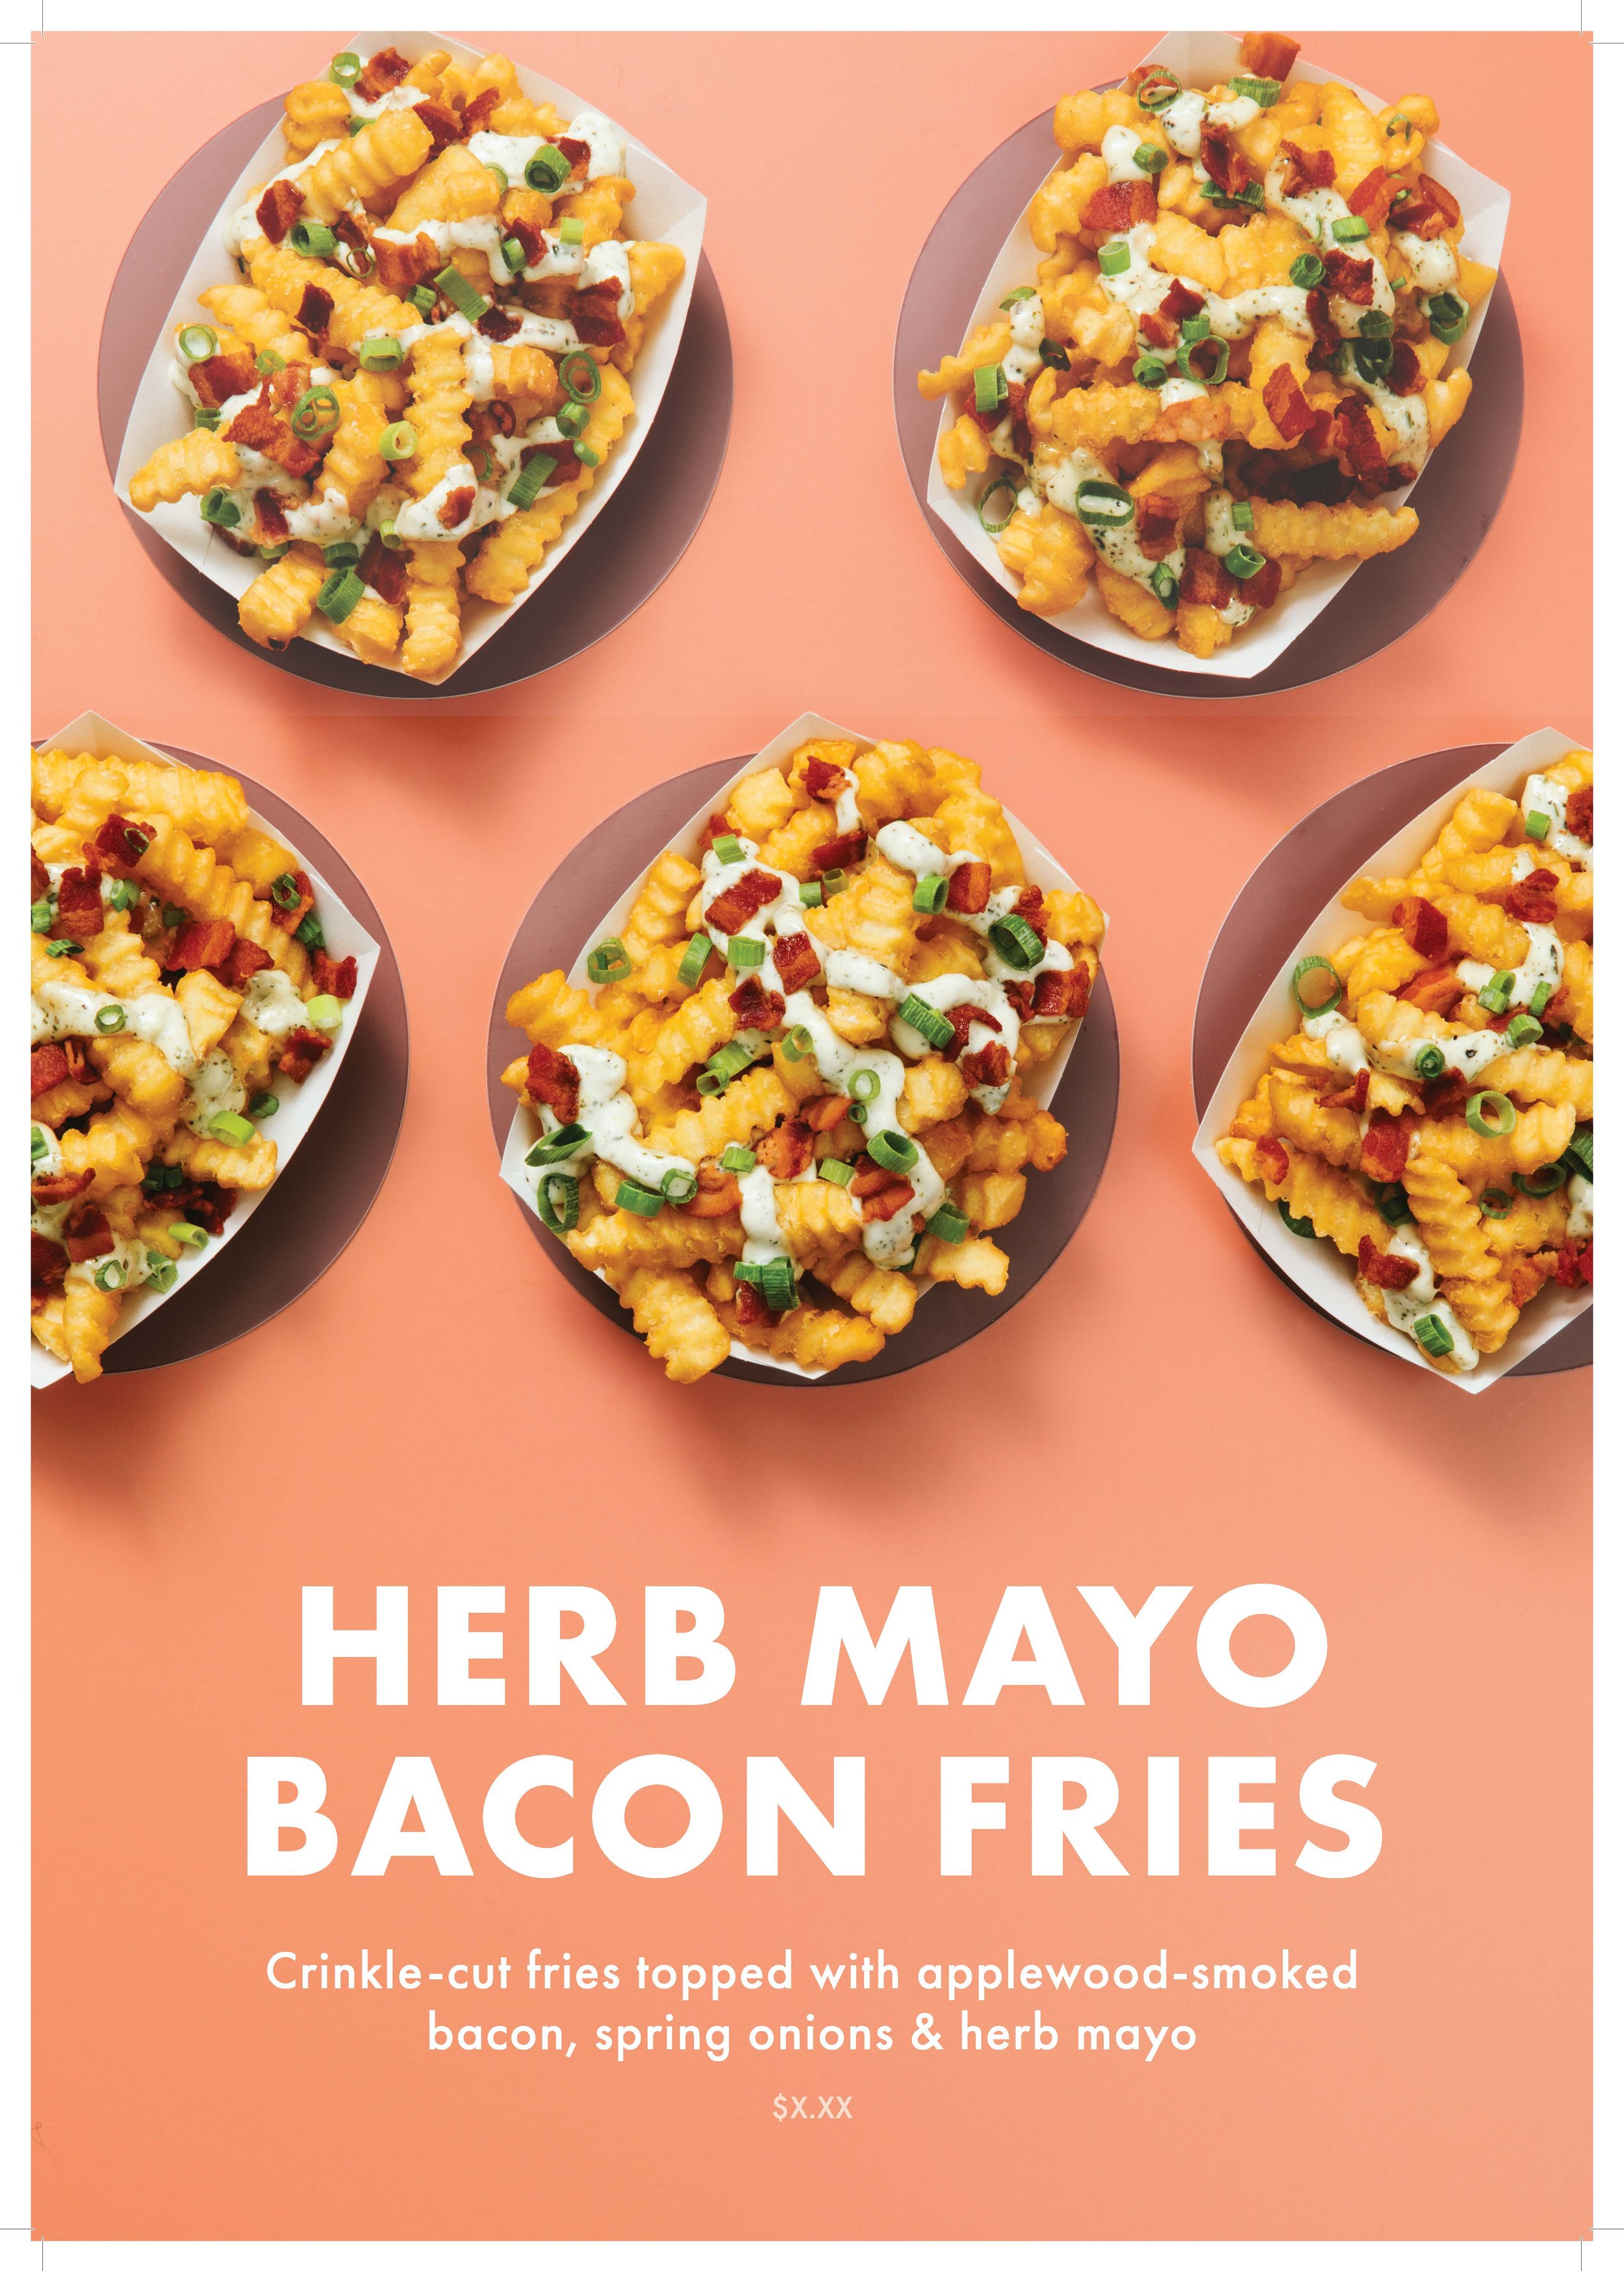 Shake Shack UK Herb Mayon Bacon Fries Campaign 